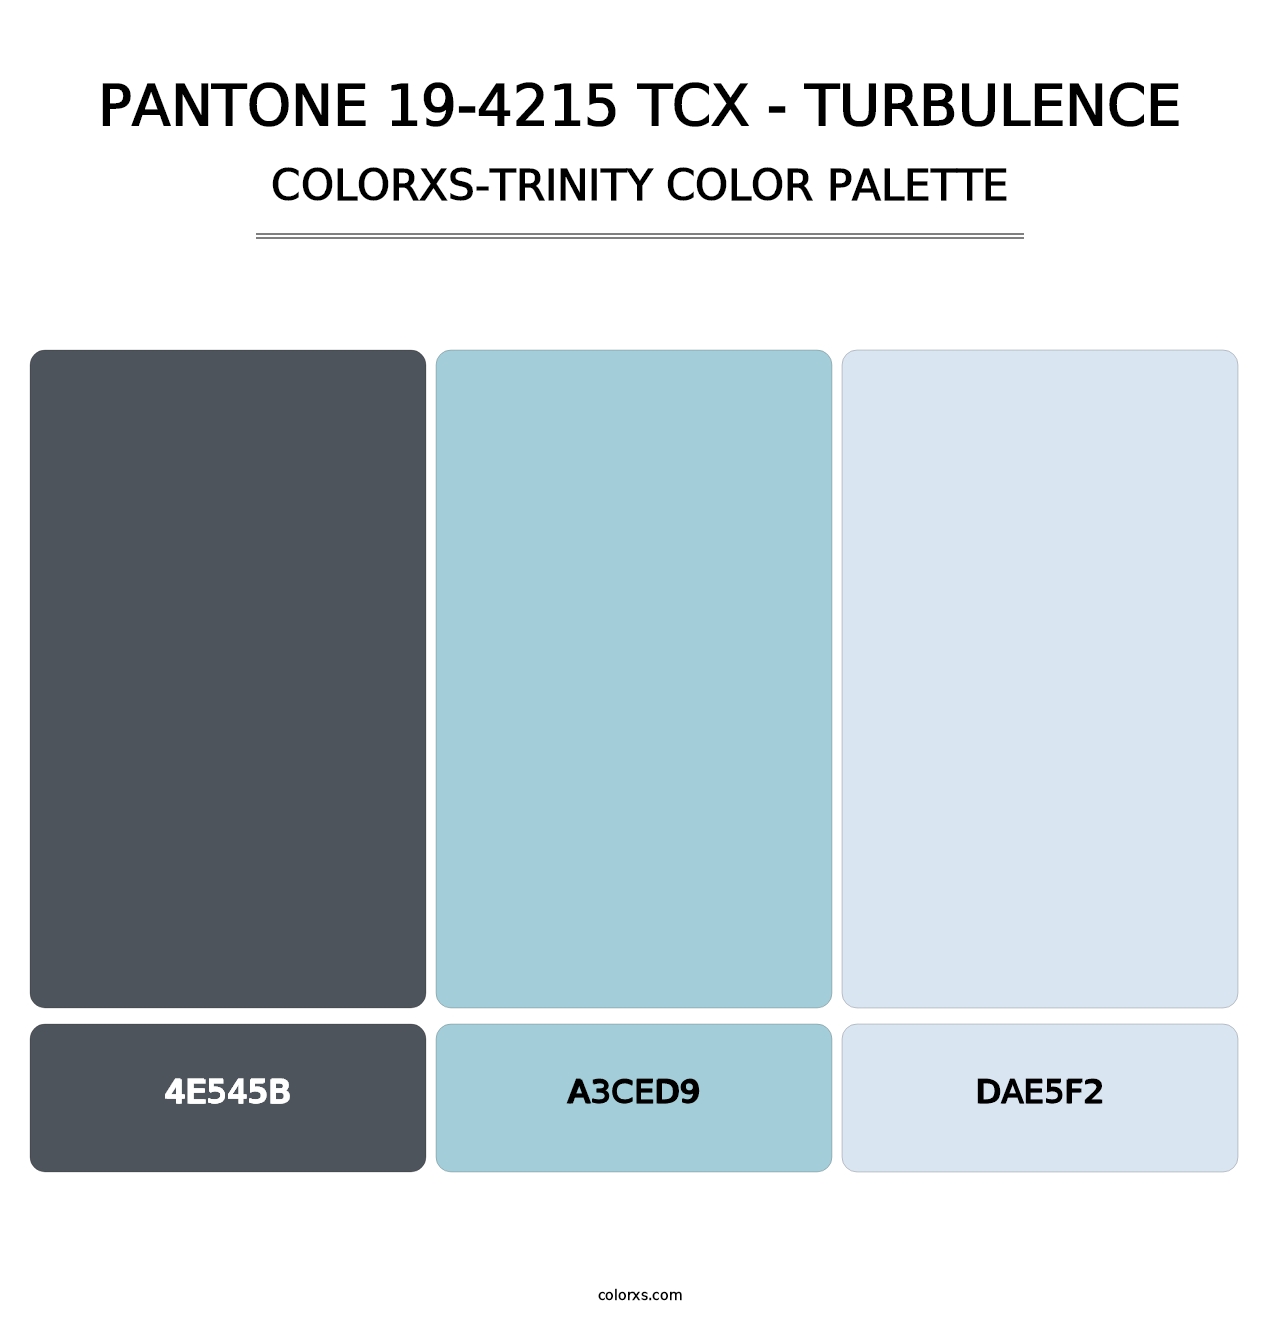 PANTONE 19-4215 TCX - Turbulence - Colorxs Trinity Palette